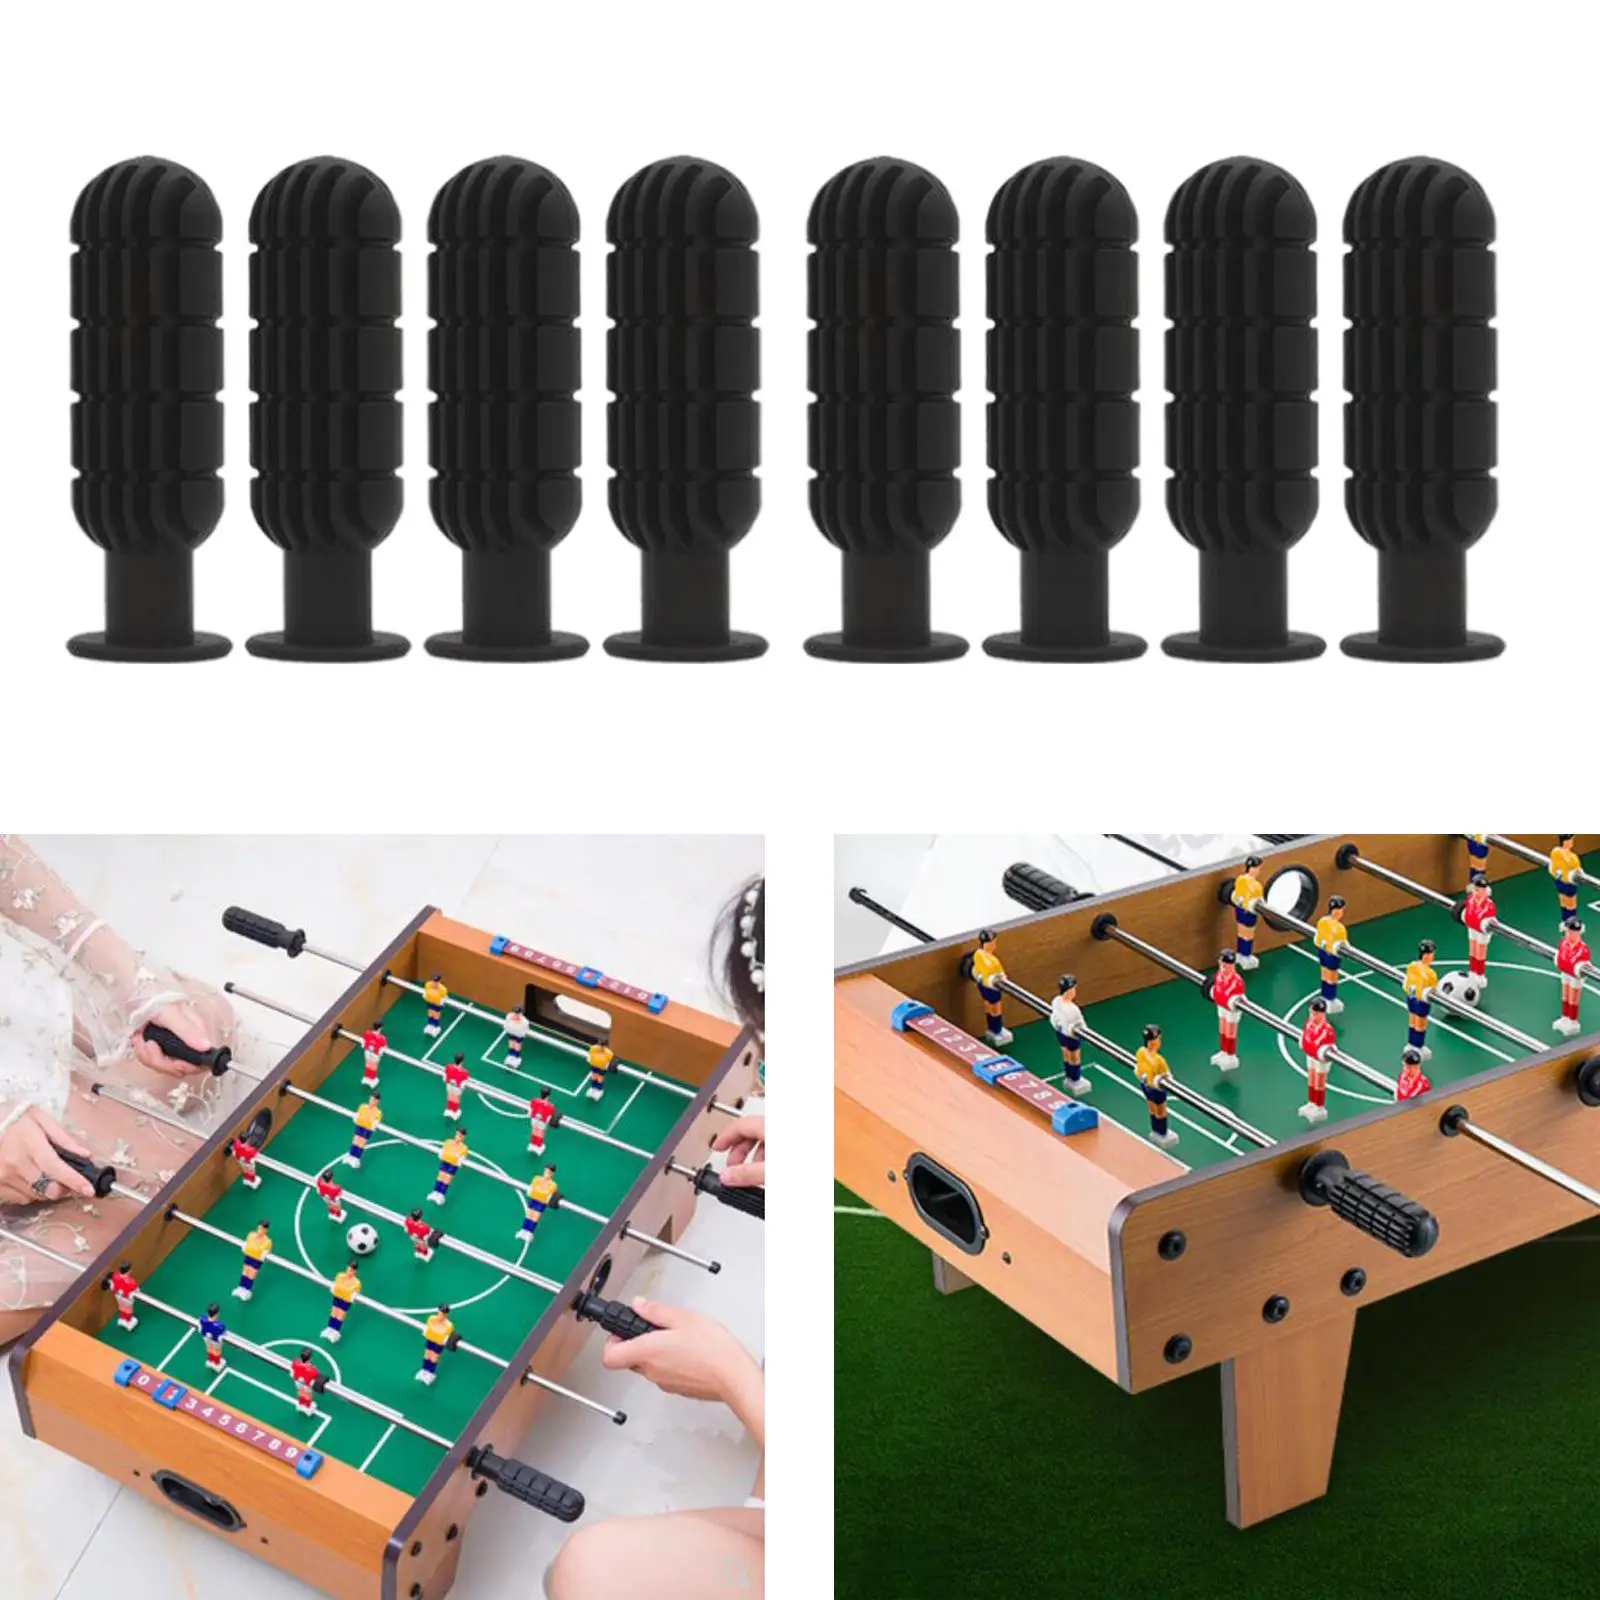 8x Foosball Handle Grips for Standard Foosball Tables 1/2 inch Foosball Rods Soccer Table Handles Black Replacement Handles